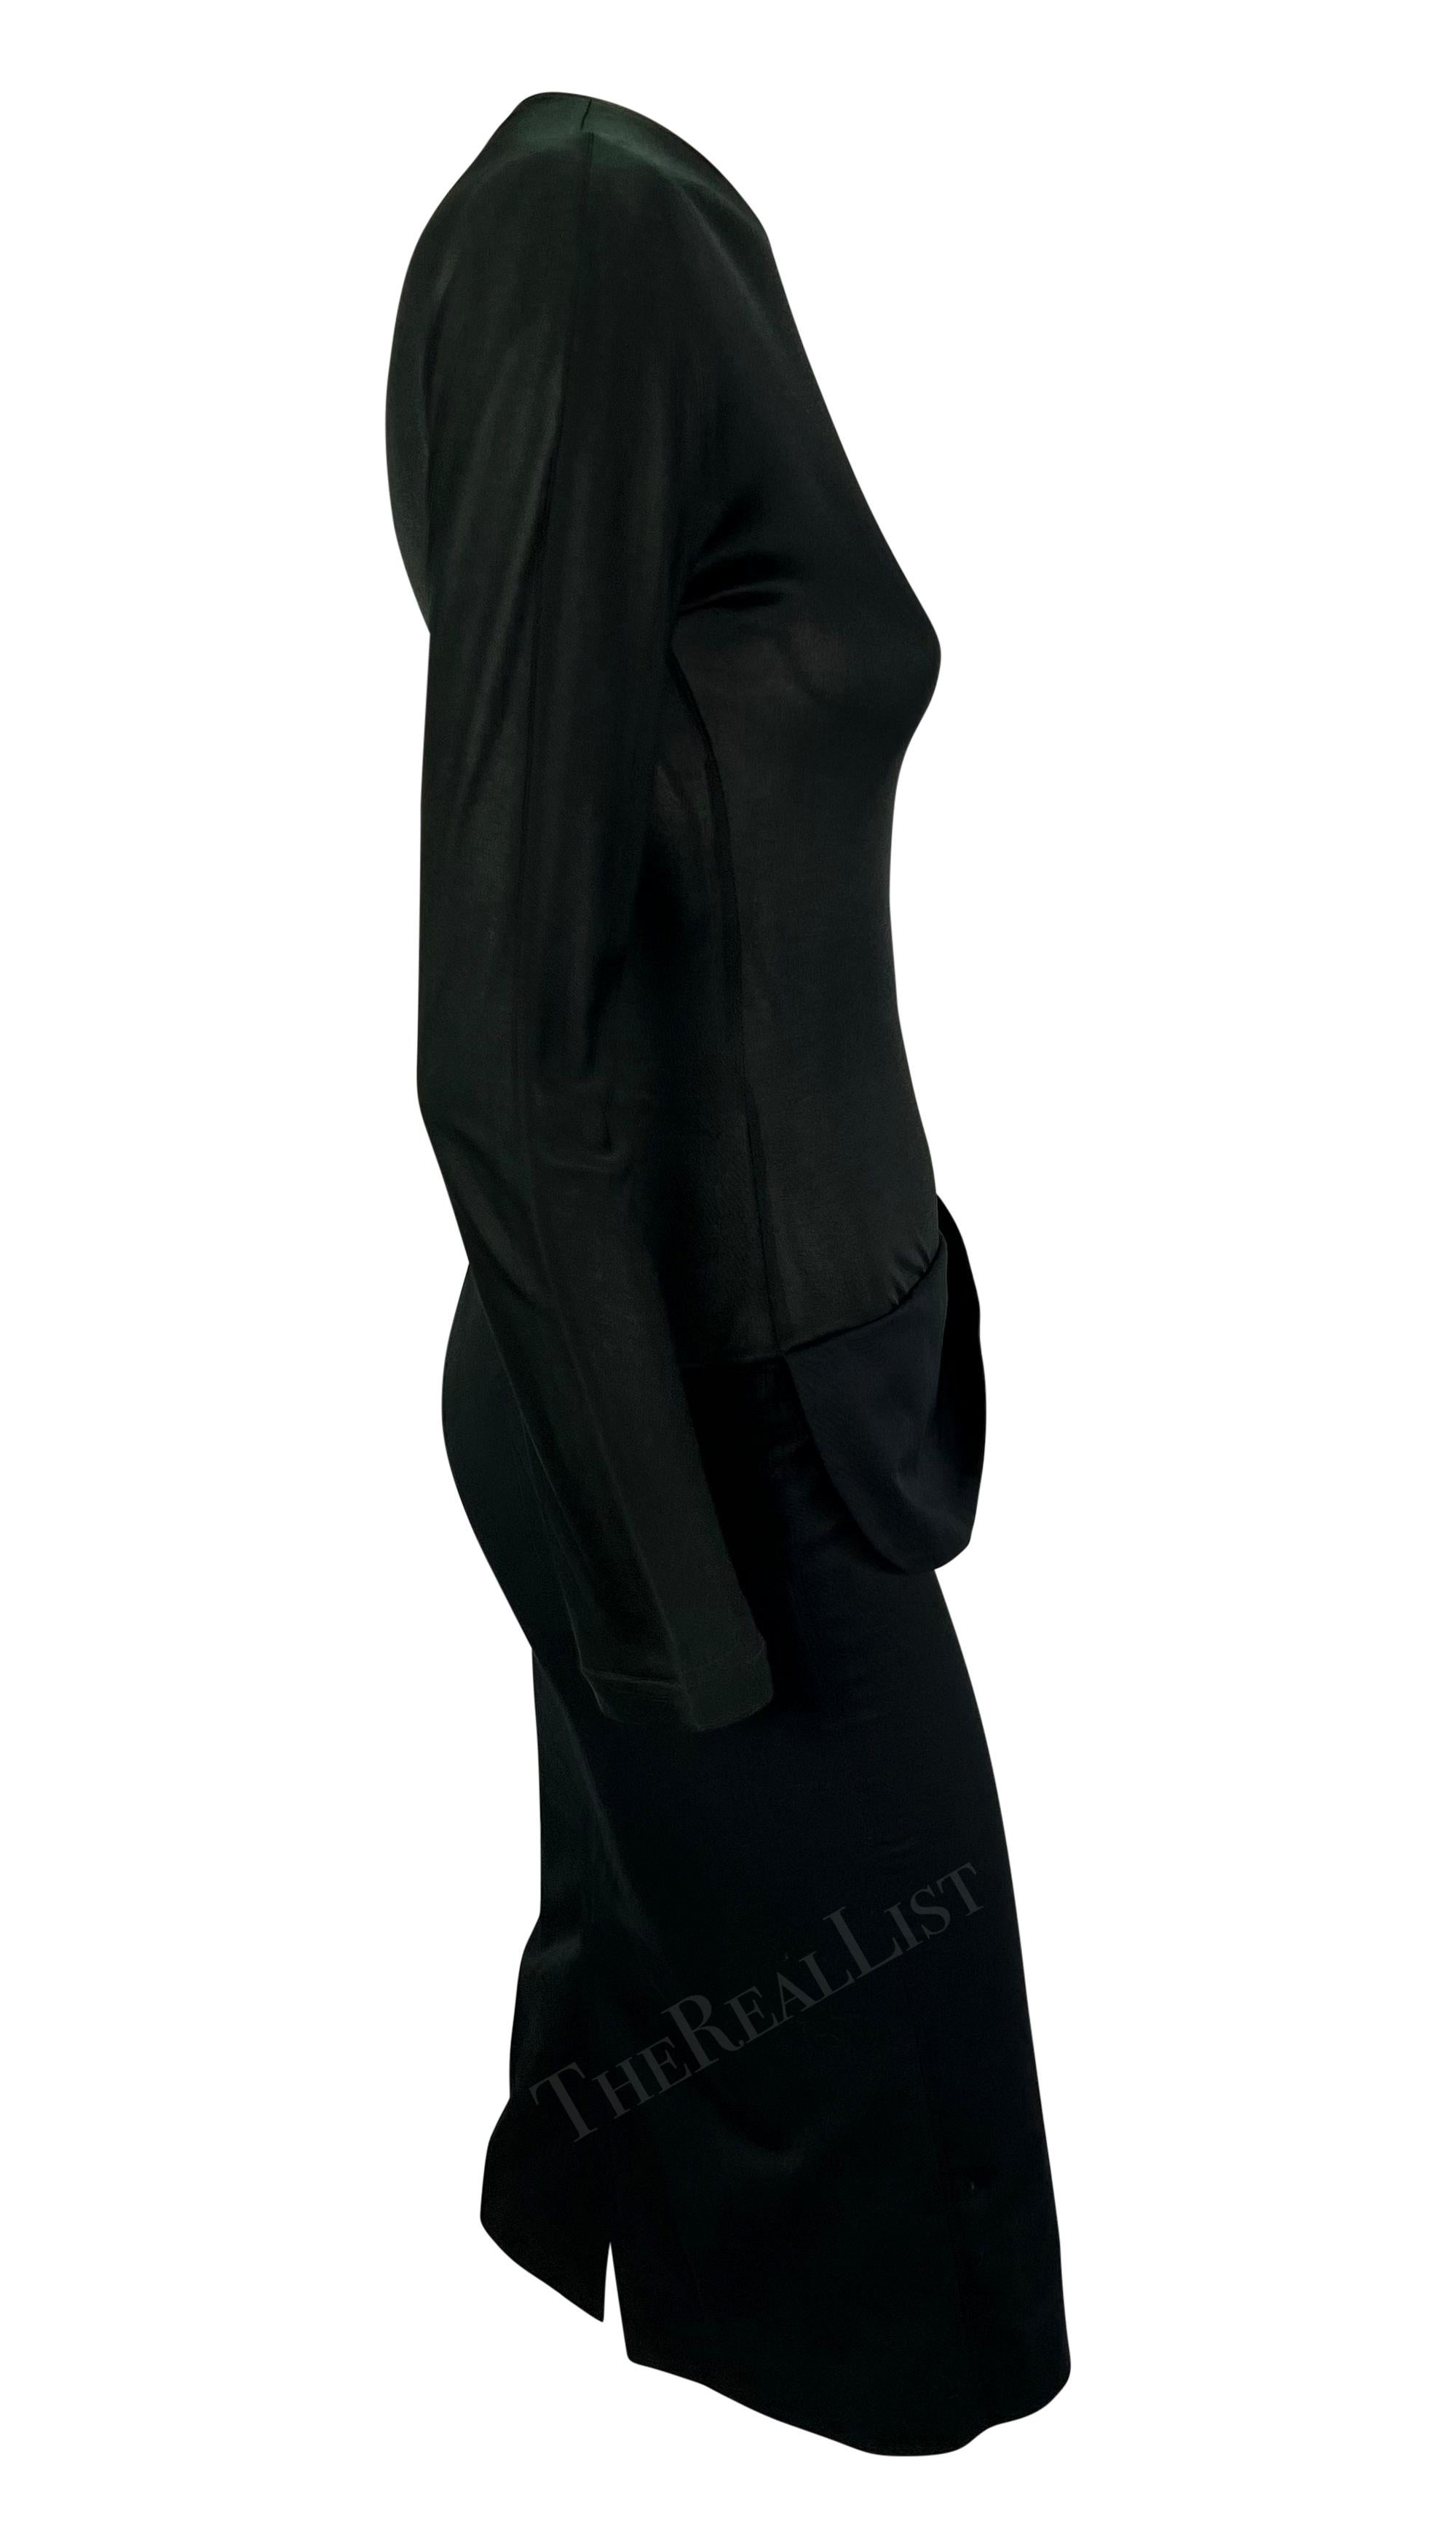 S/S 1998 Alexander McQueen 'Golden Shower' Black Long Sleeve Cowl Dress For Sale 2